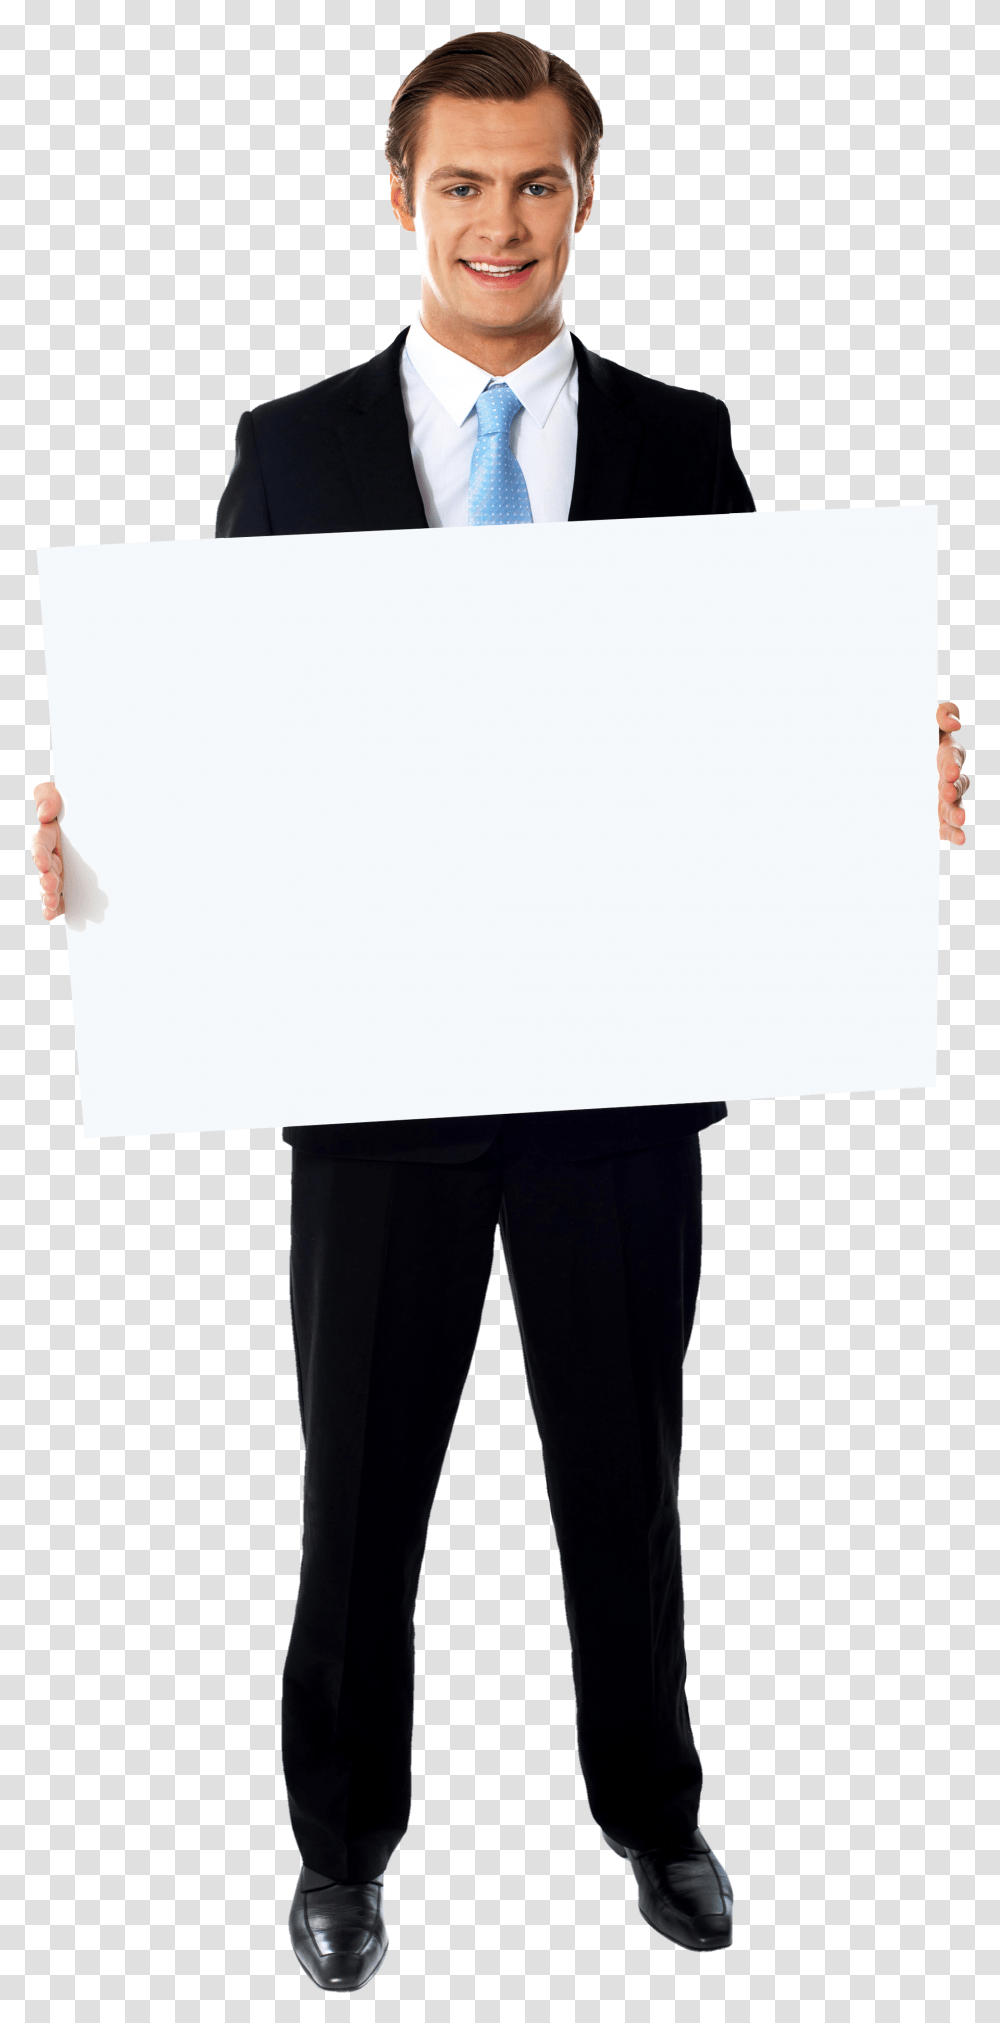 Businessmen Holding Banner Image Businessman Holding Banner, Person, White Board, Suit, Overcoat Transparent Png